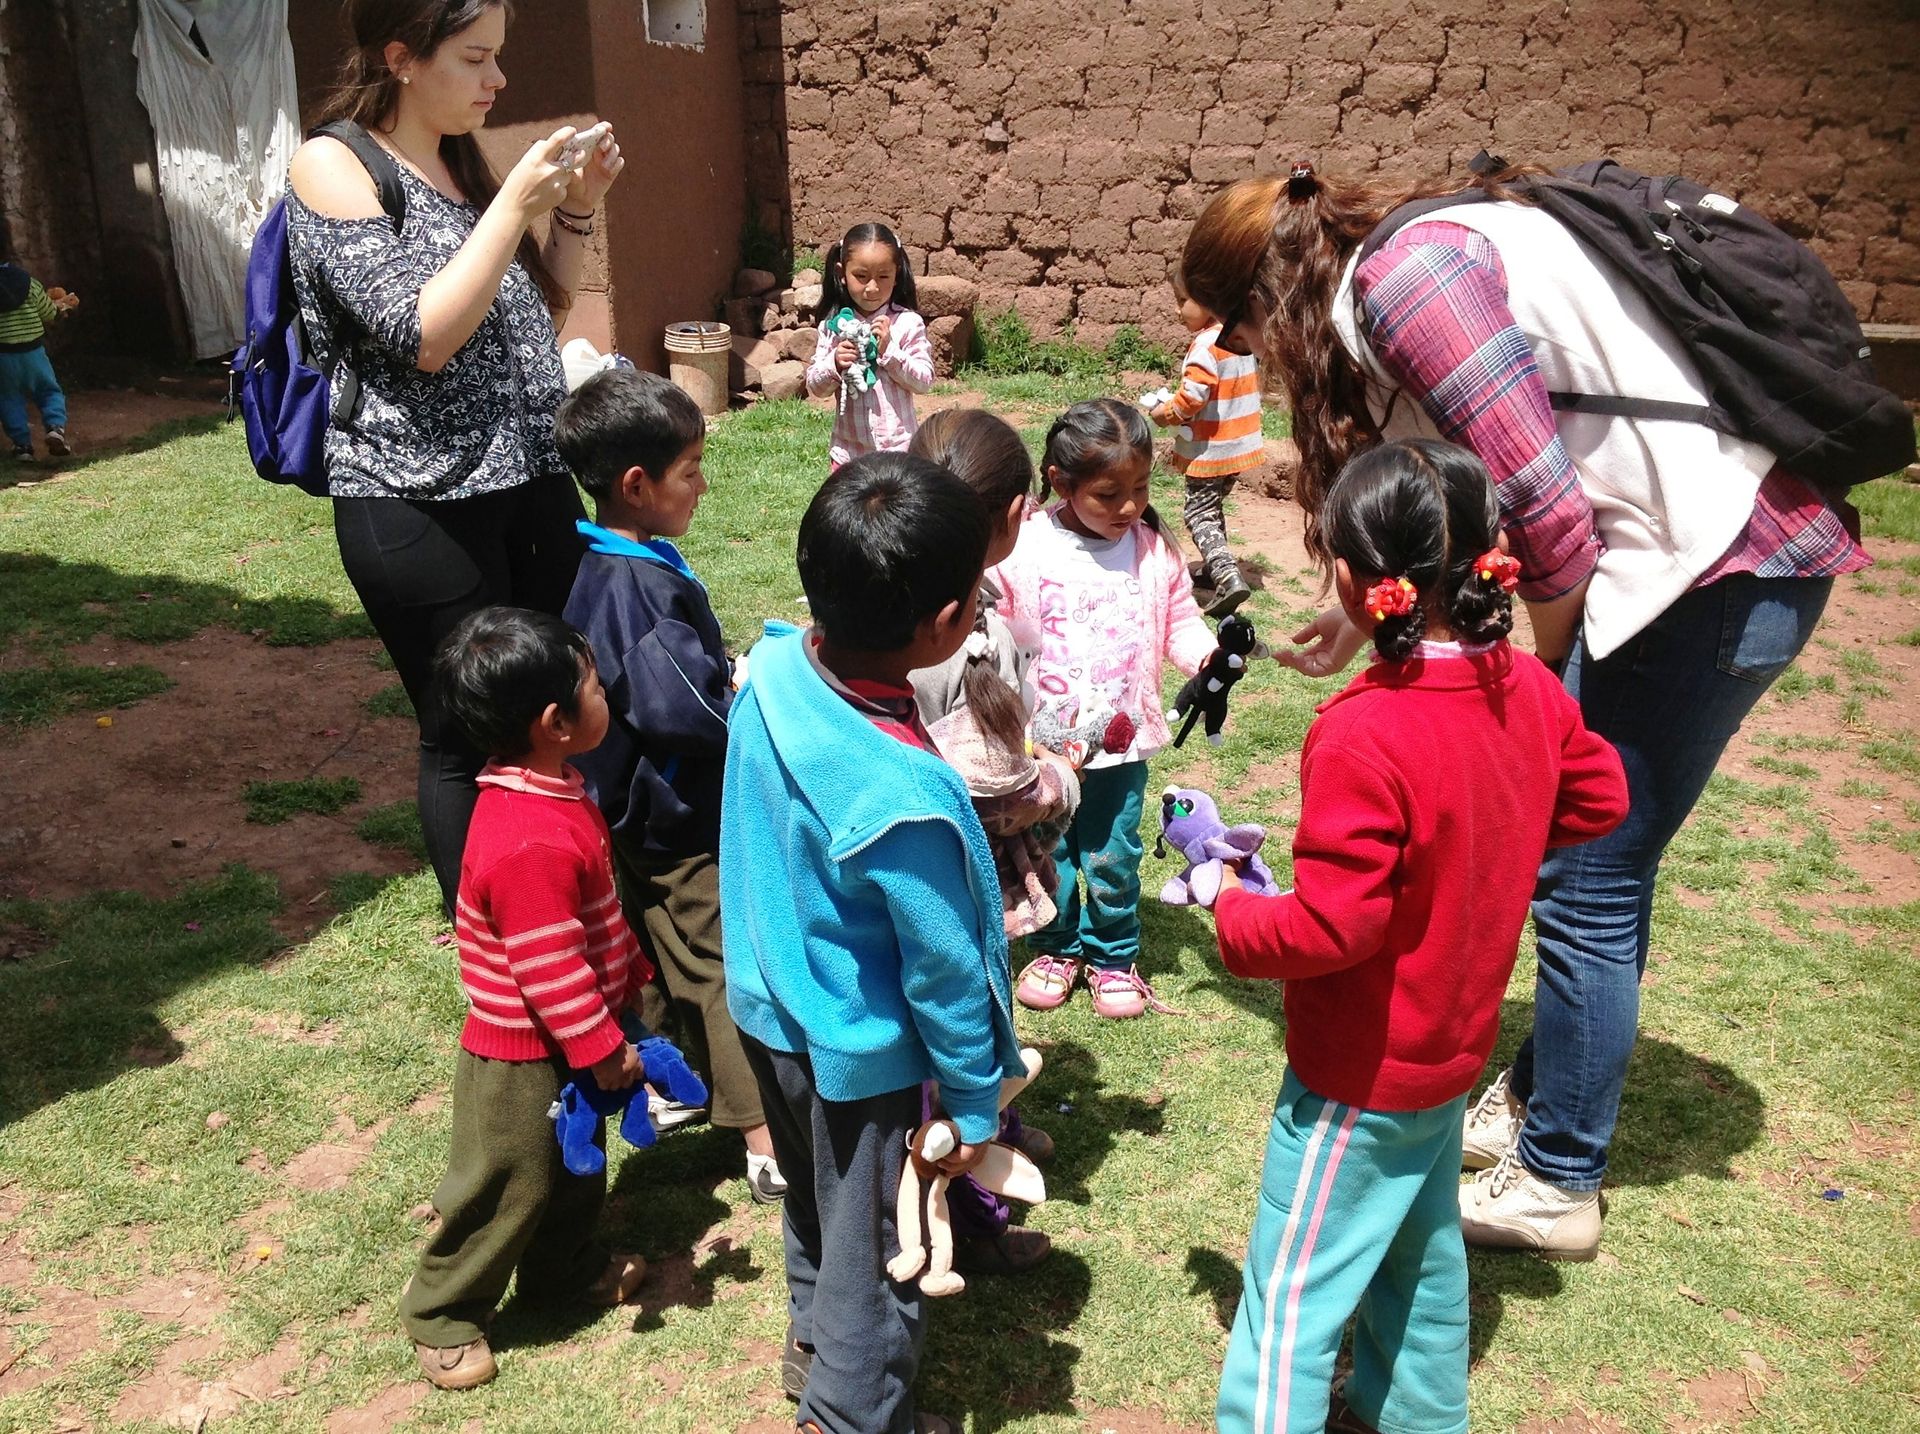 Tourists Visiting a Kinder Garden